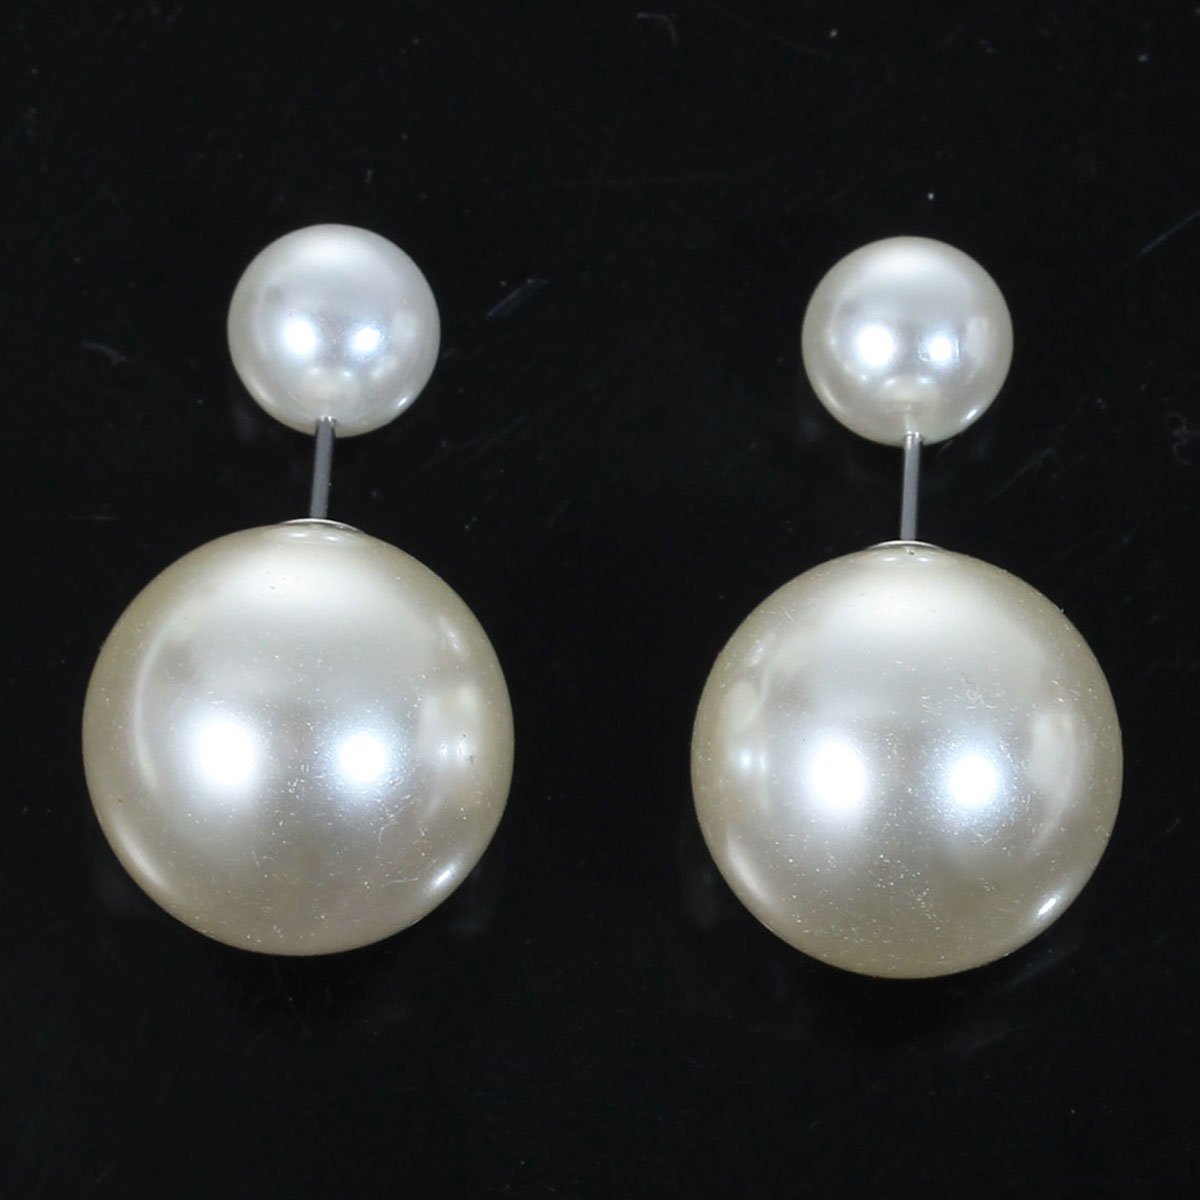 Double Sided Imitation Pear Ball Earrings - My Custom Tee Party